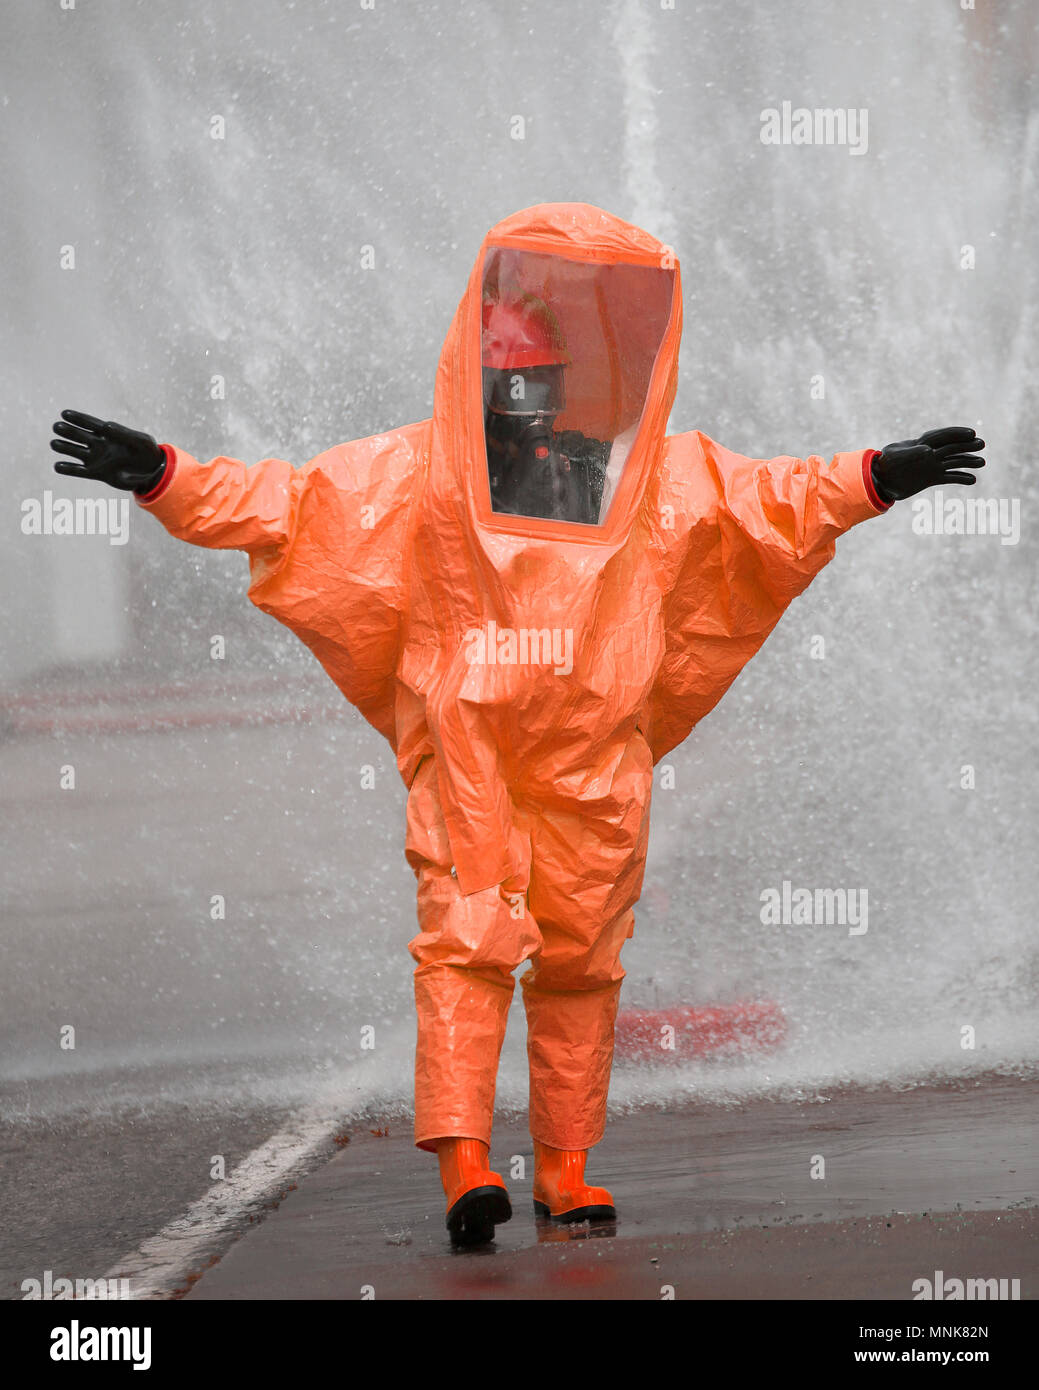 Hazmat Suit Orange High Resolution Stock Photography And Images Alamy - roblox orange hazmat suit